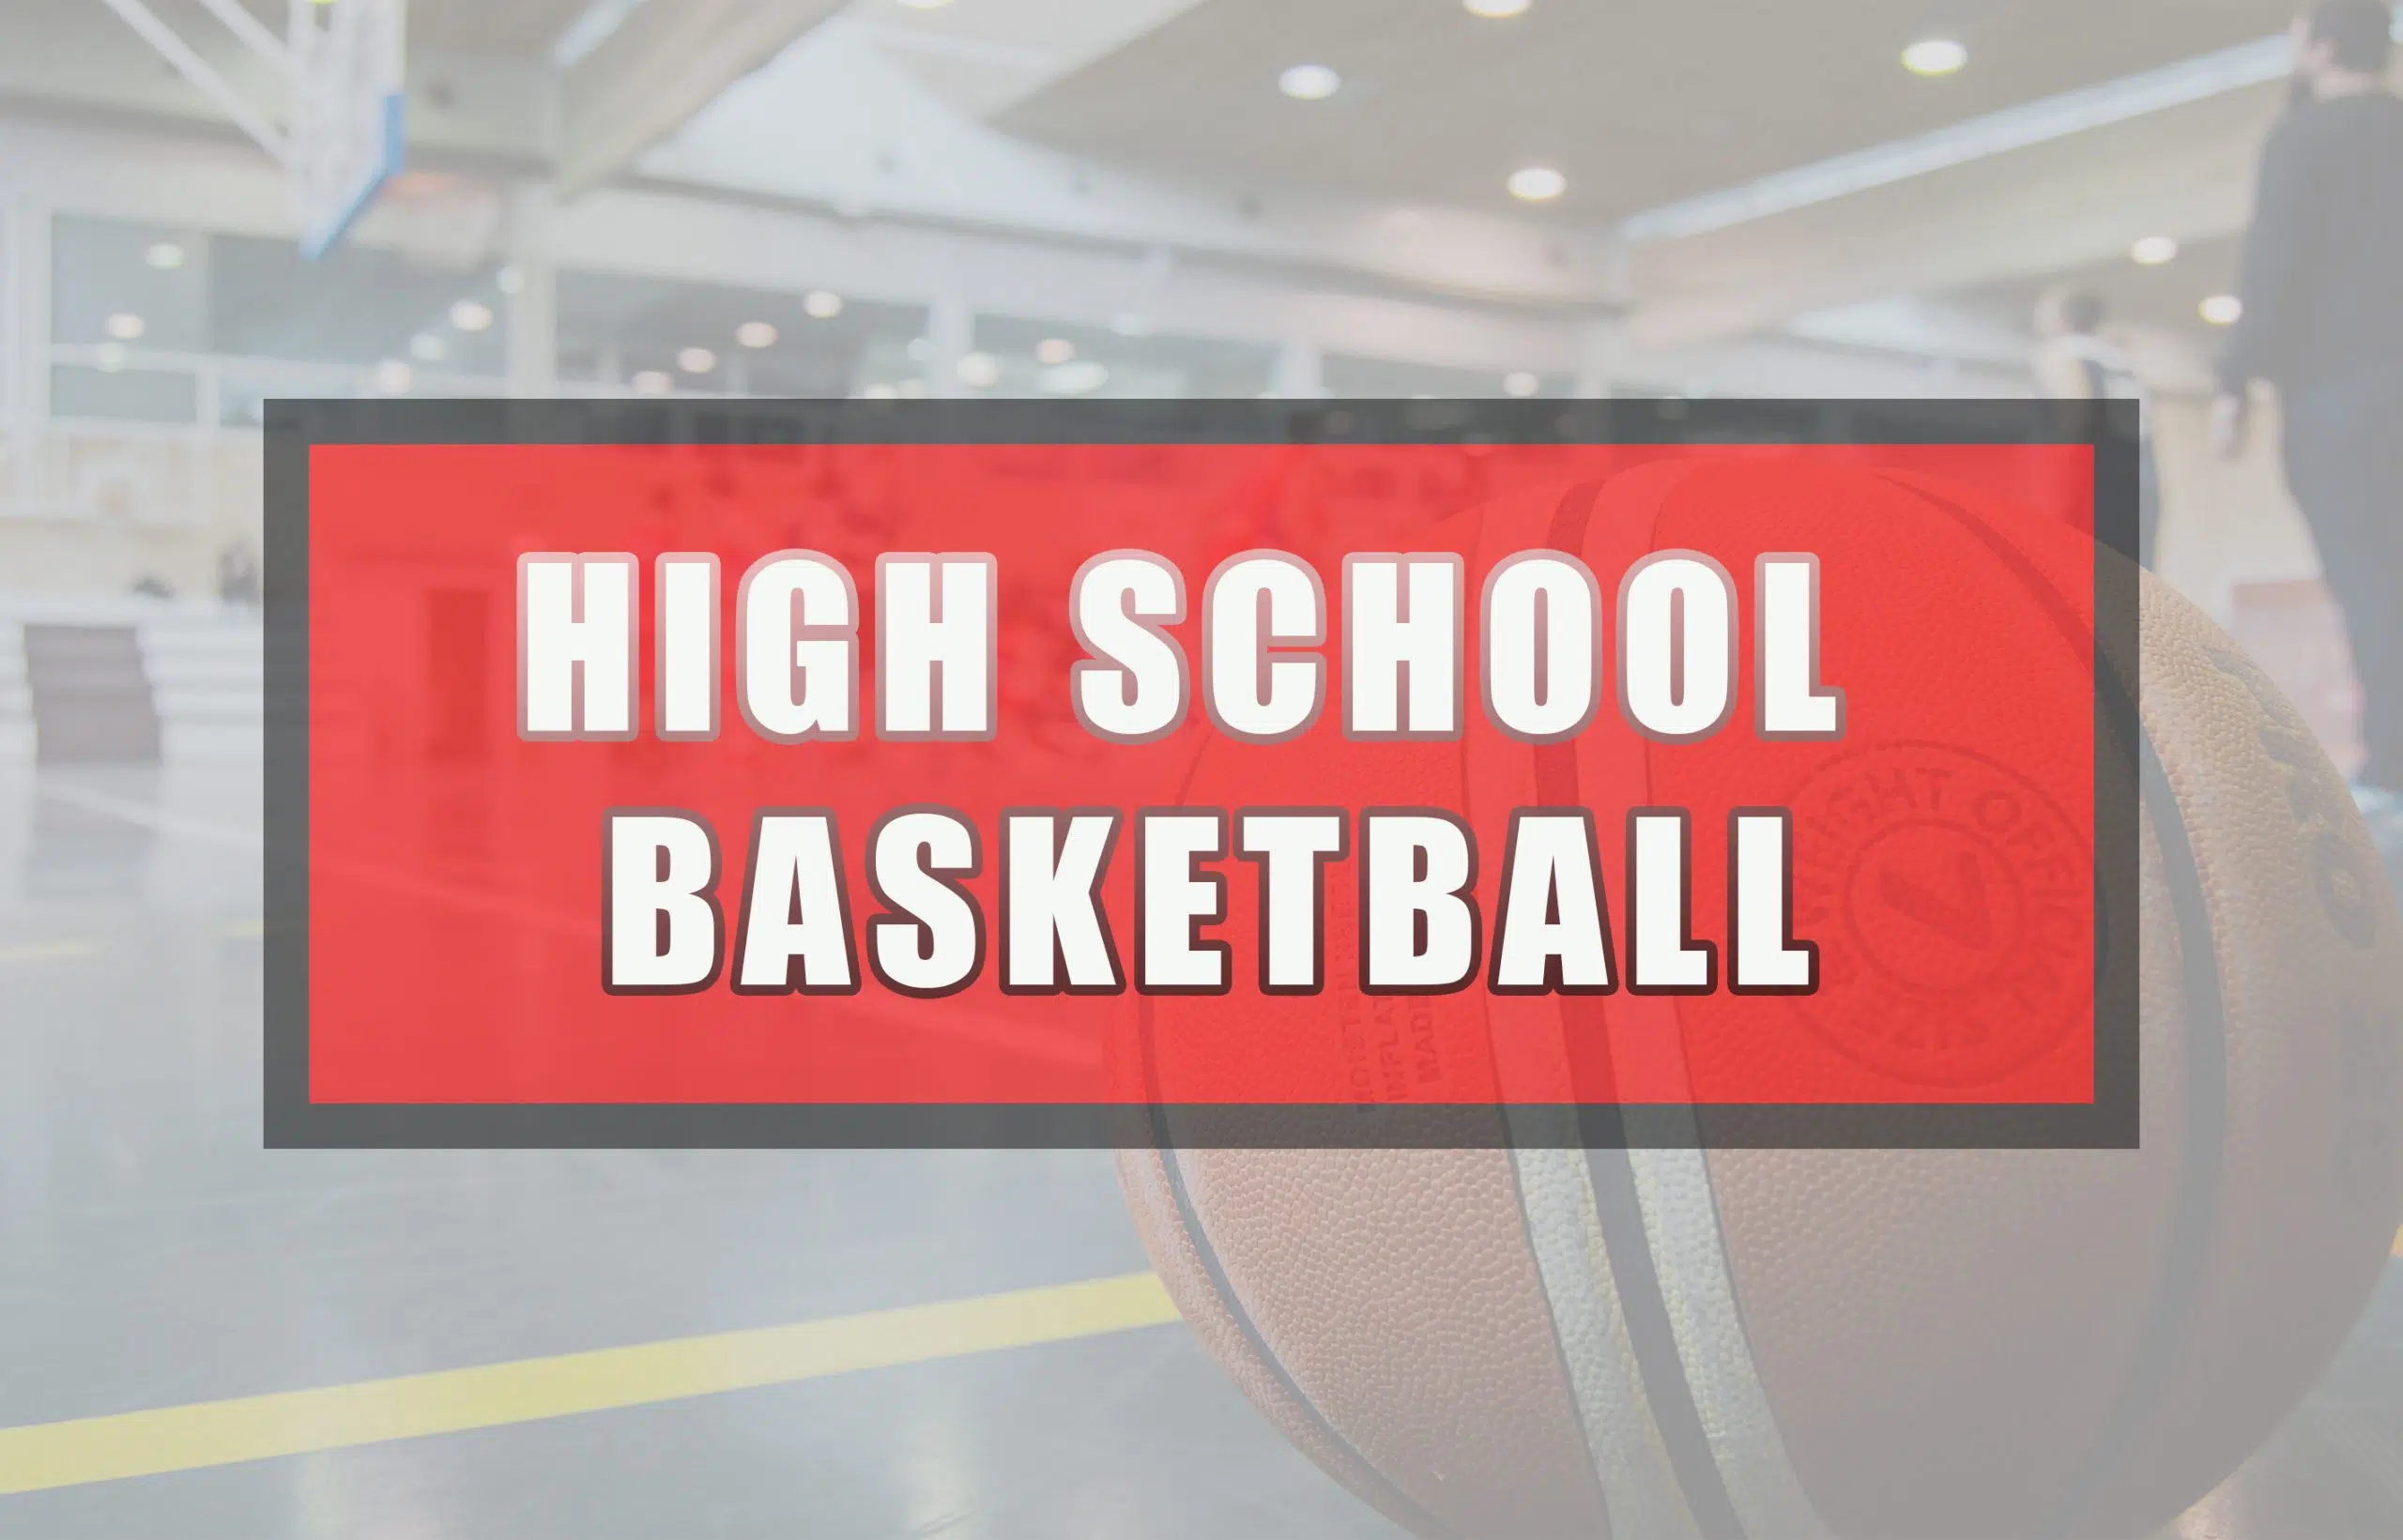 Tuesday Boasts a Busy High School Basketball Schedule